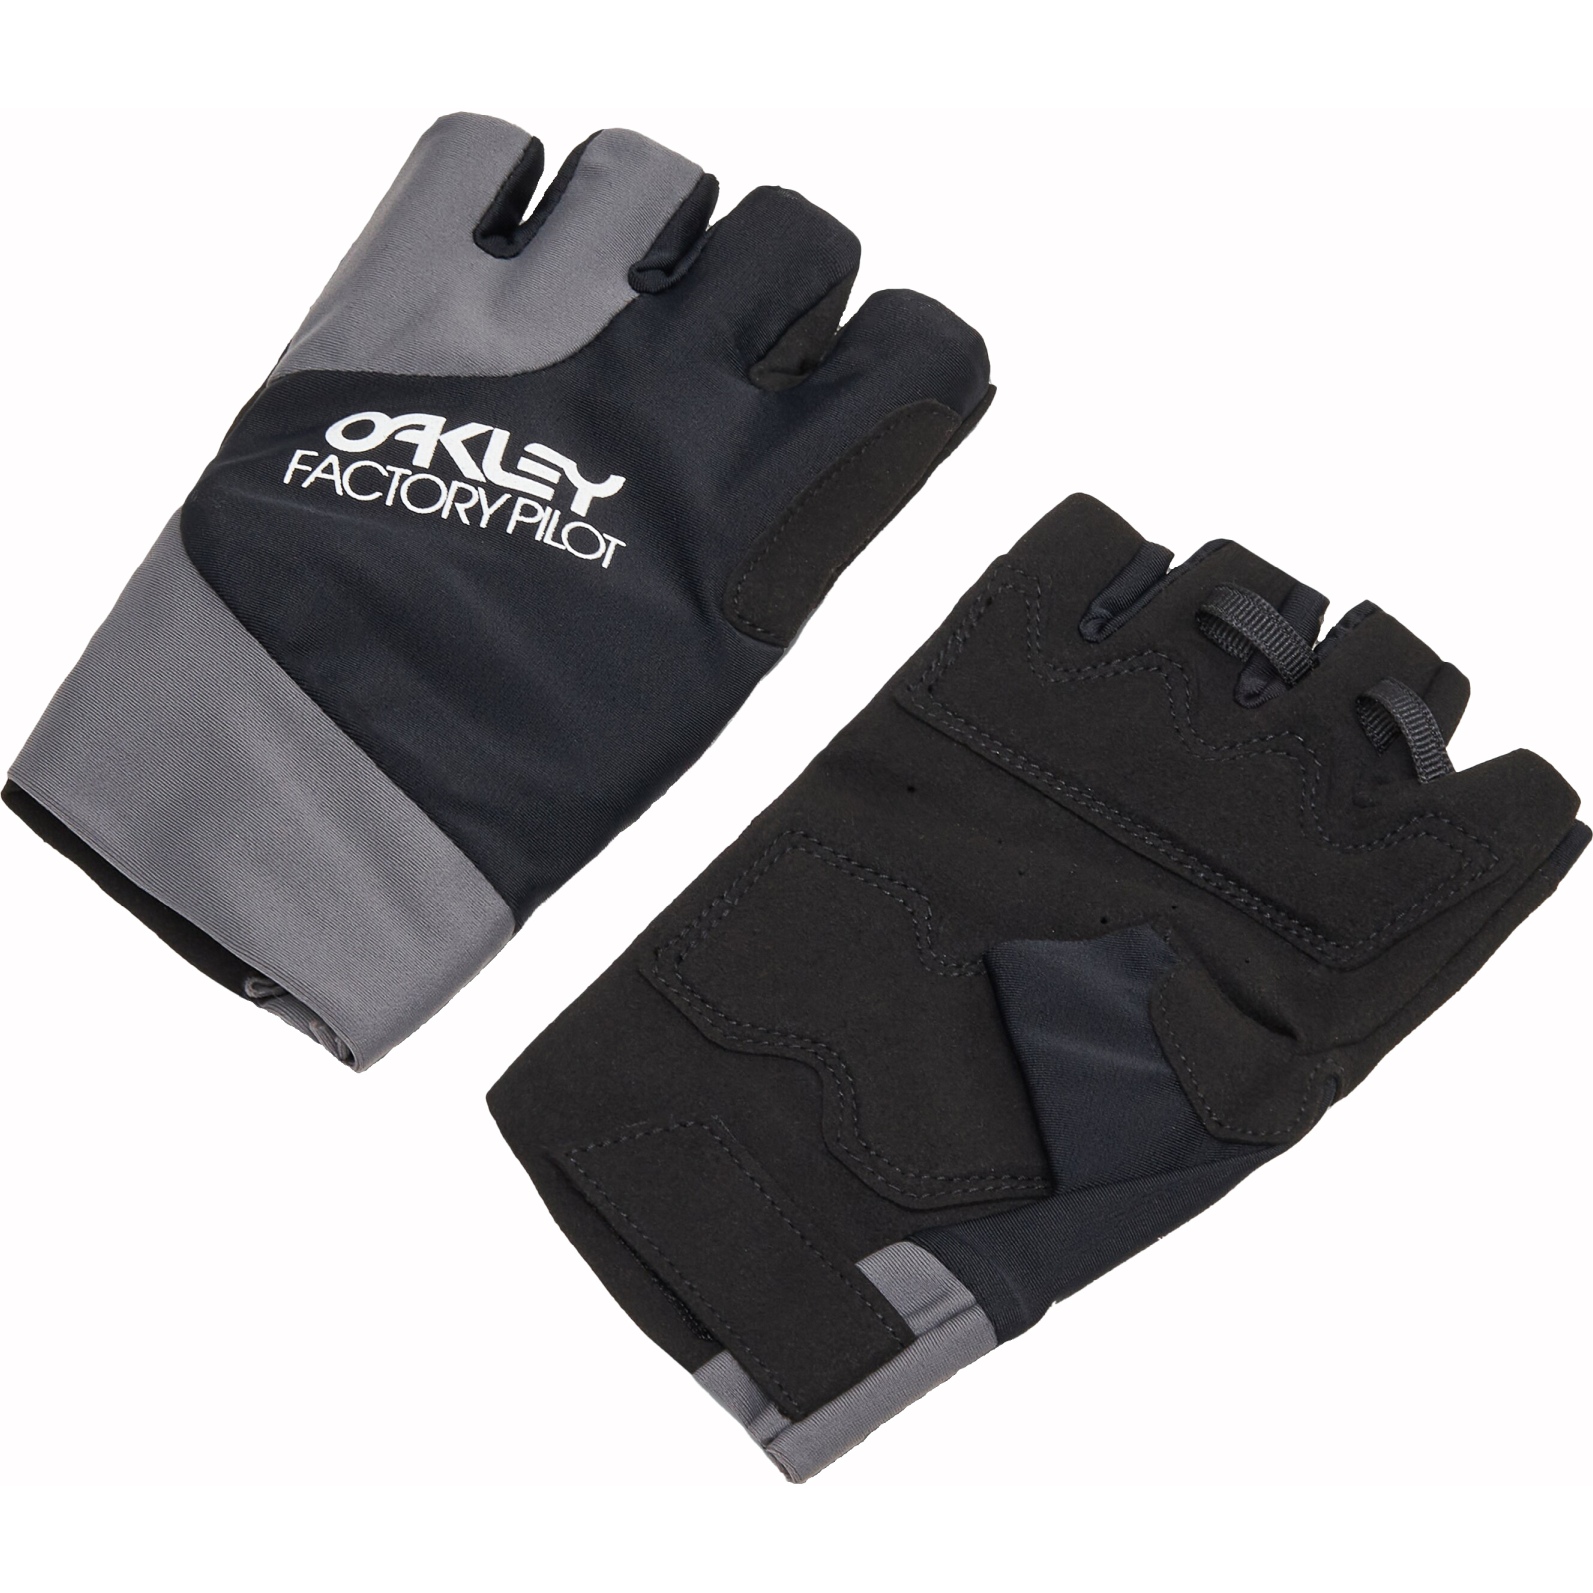 Picture of Oakley Factory Pilot MTB Short Gloves Women - Blackout